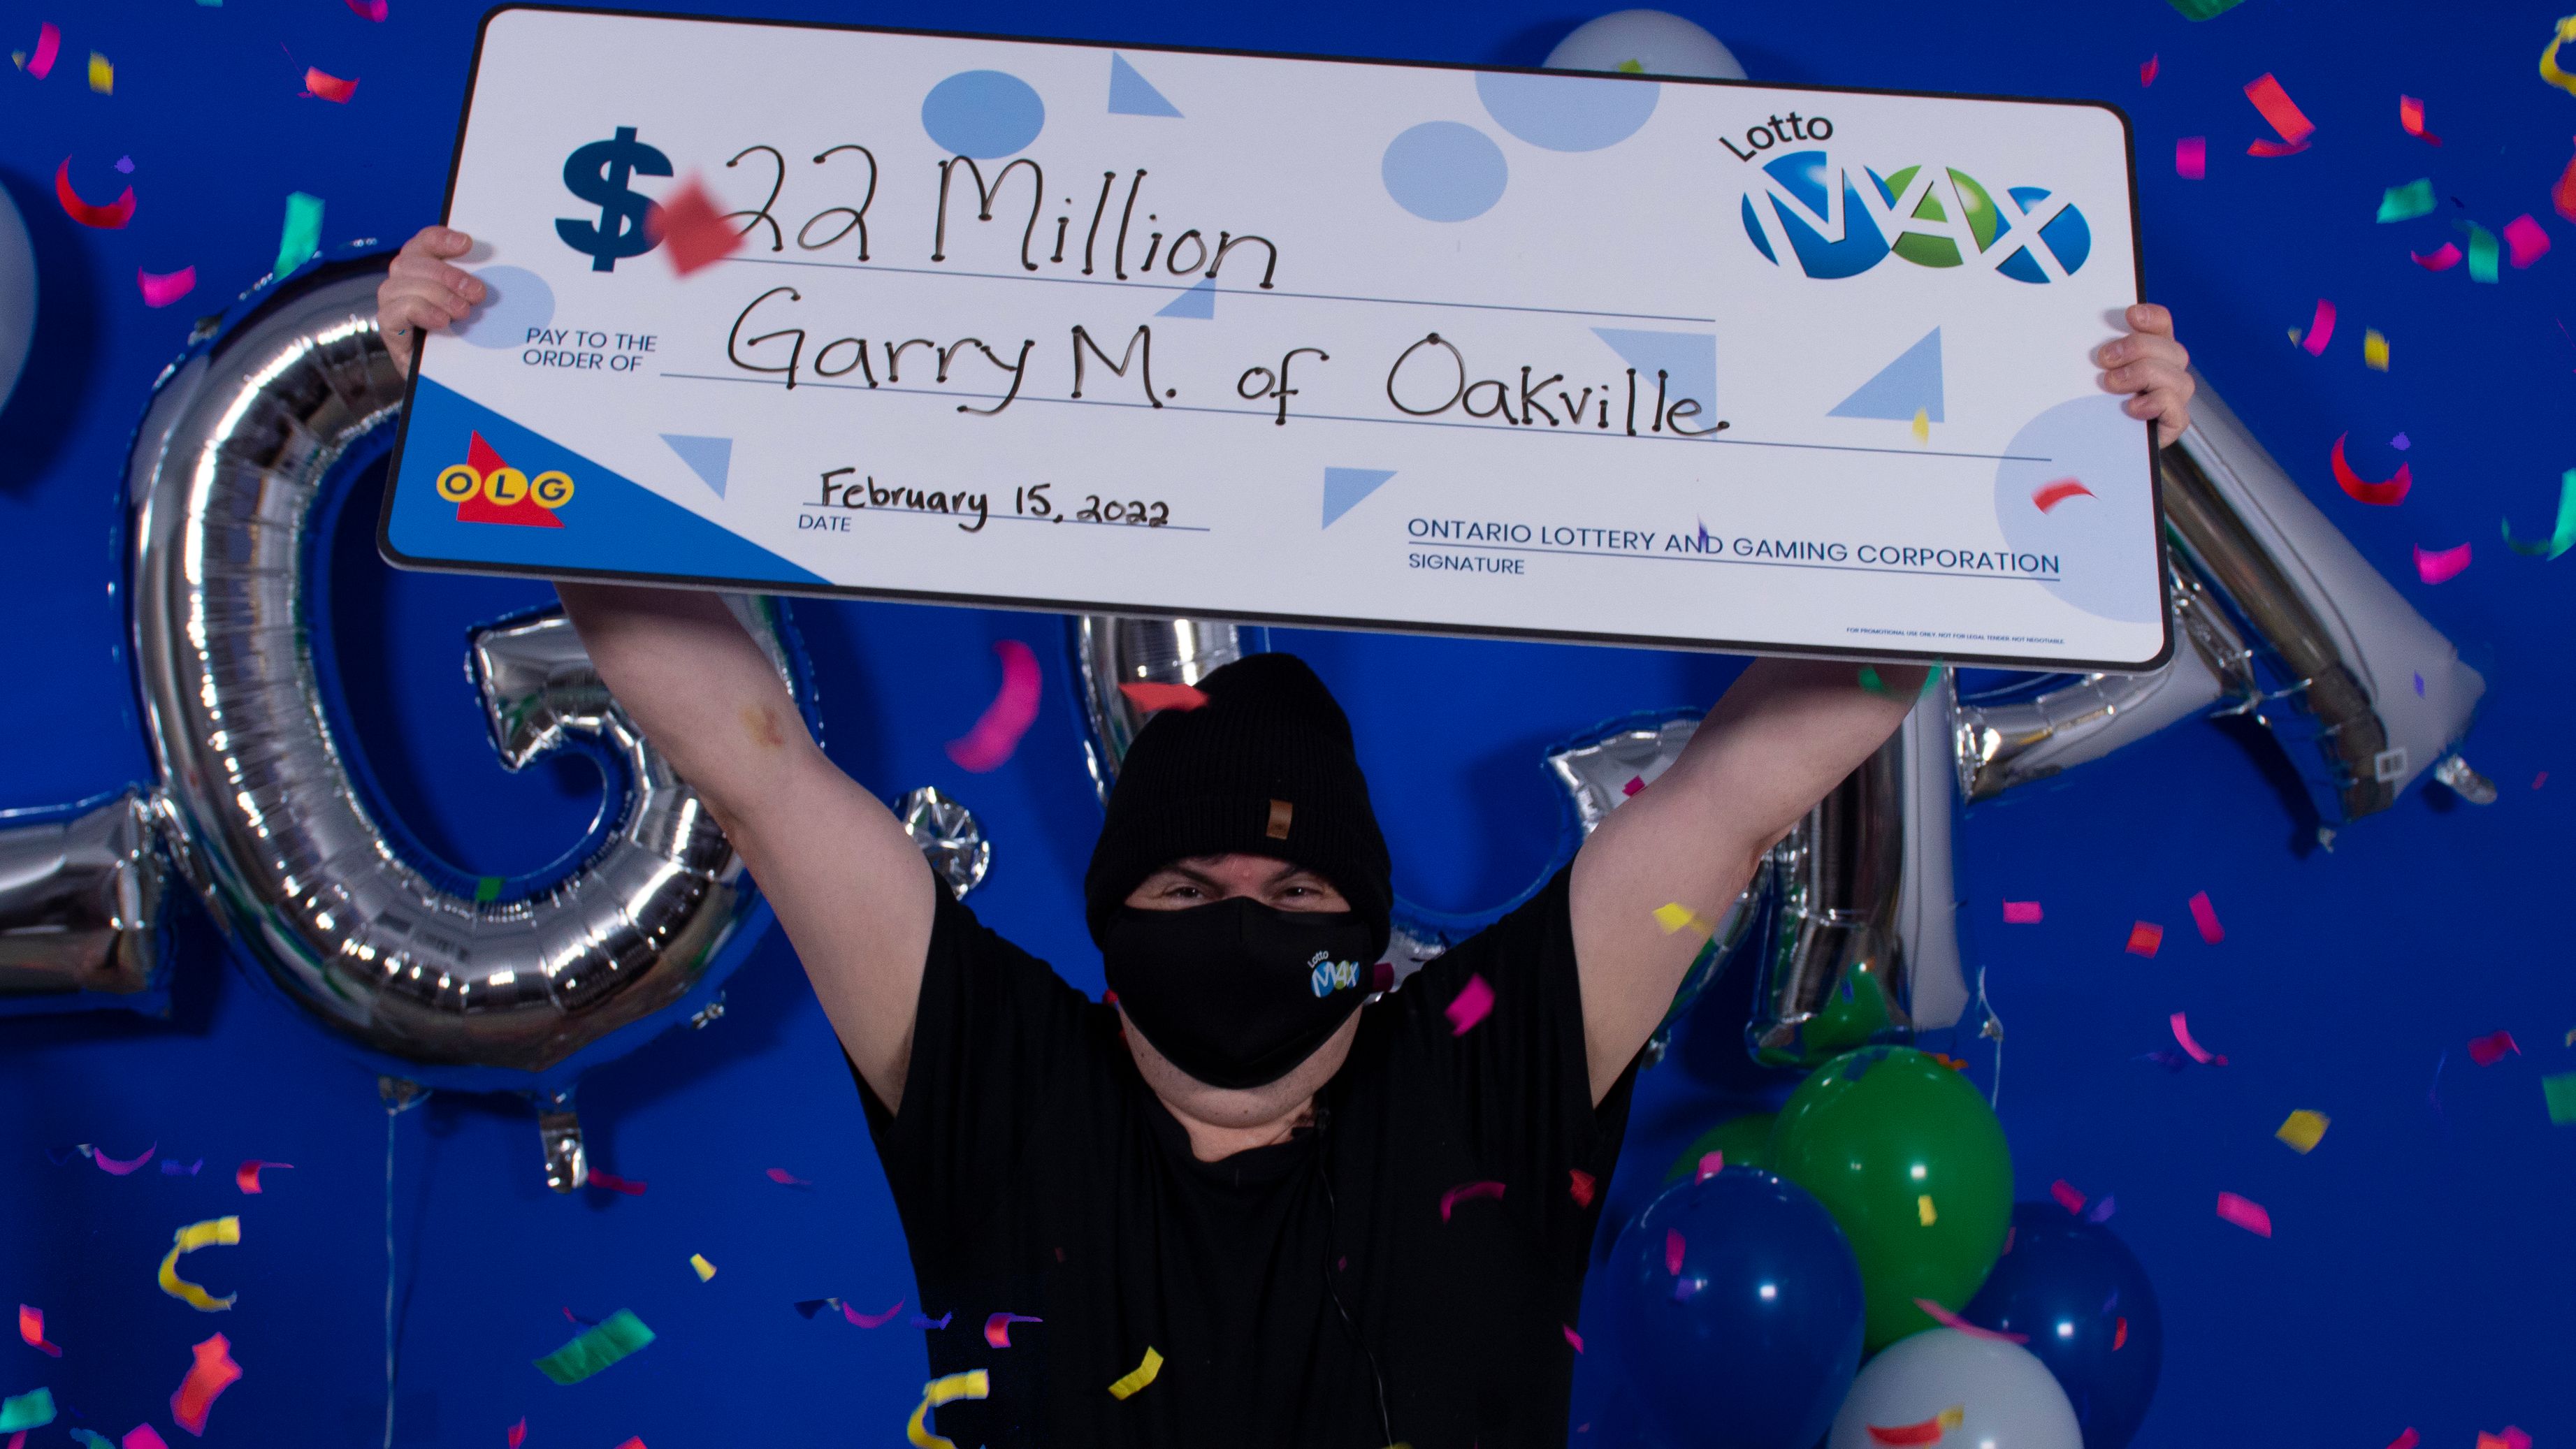 Garry Myles of Oakville, Ontario win $22M in Lotto Max Jan. 18, 2022 draw. | OLG